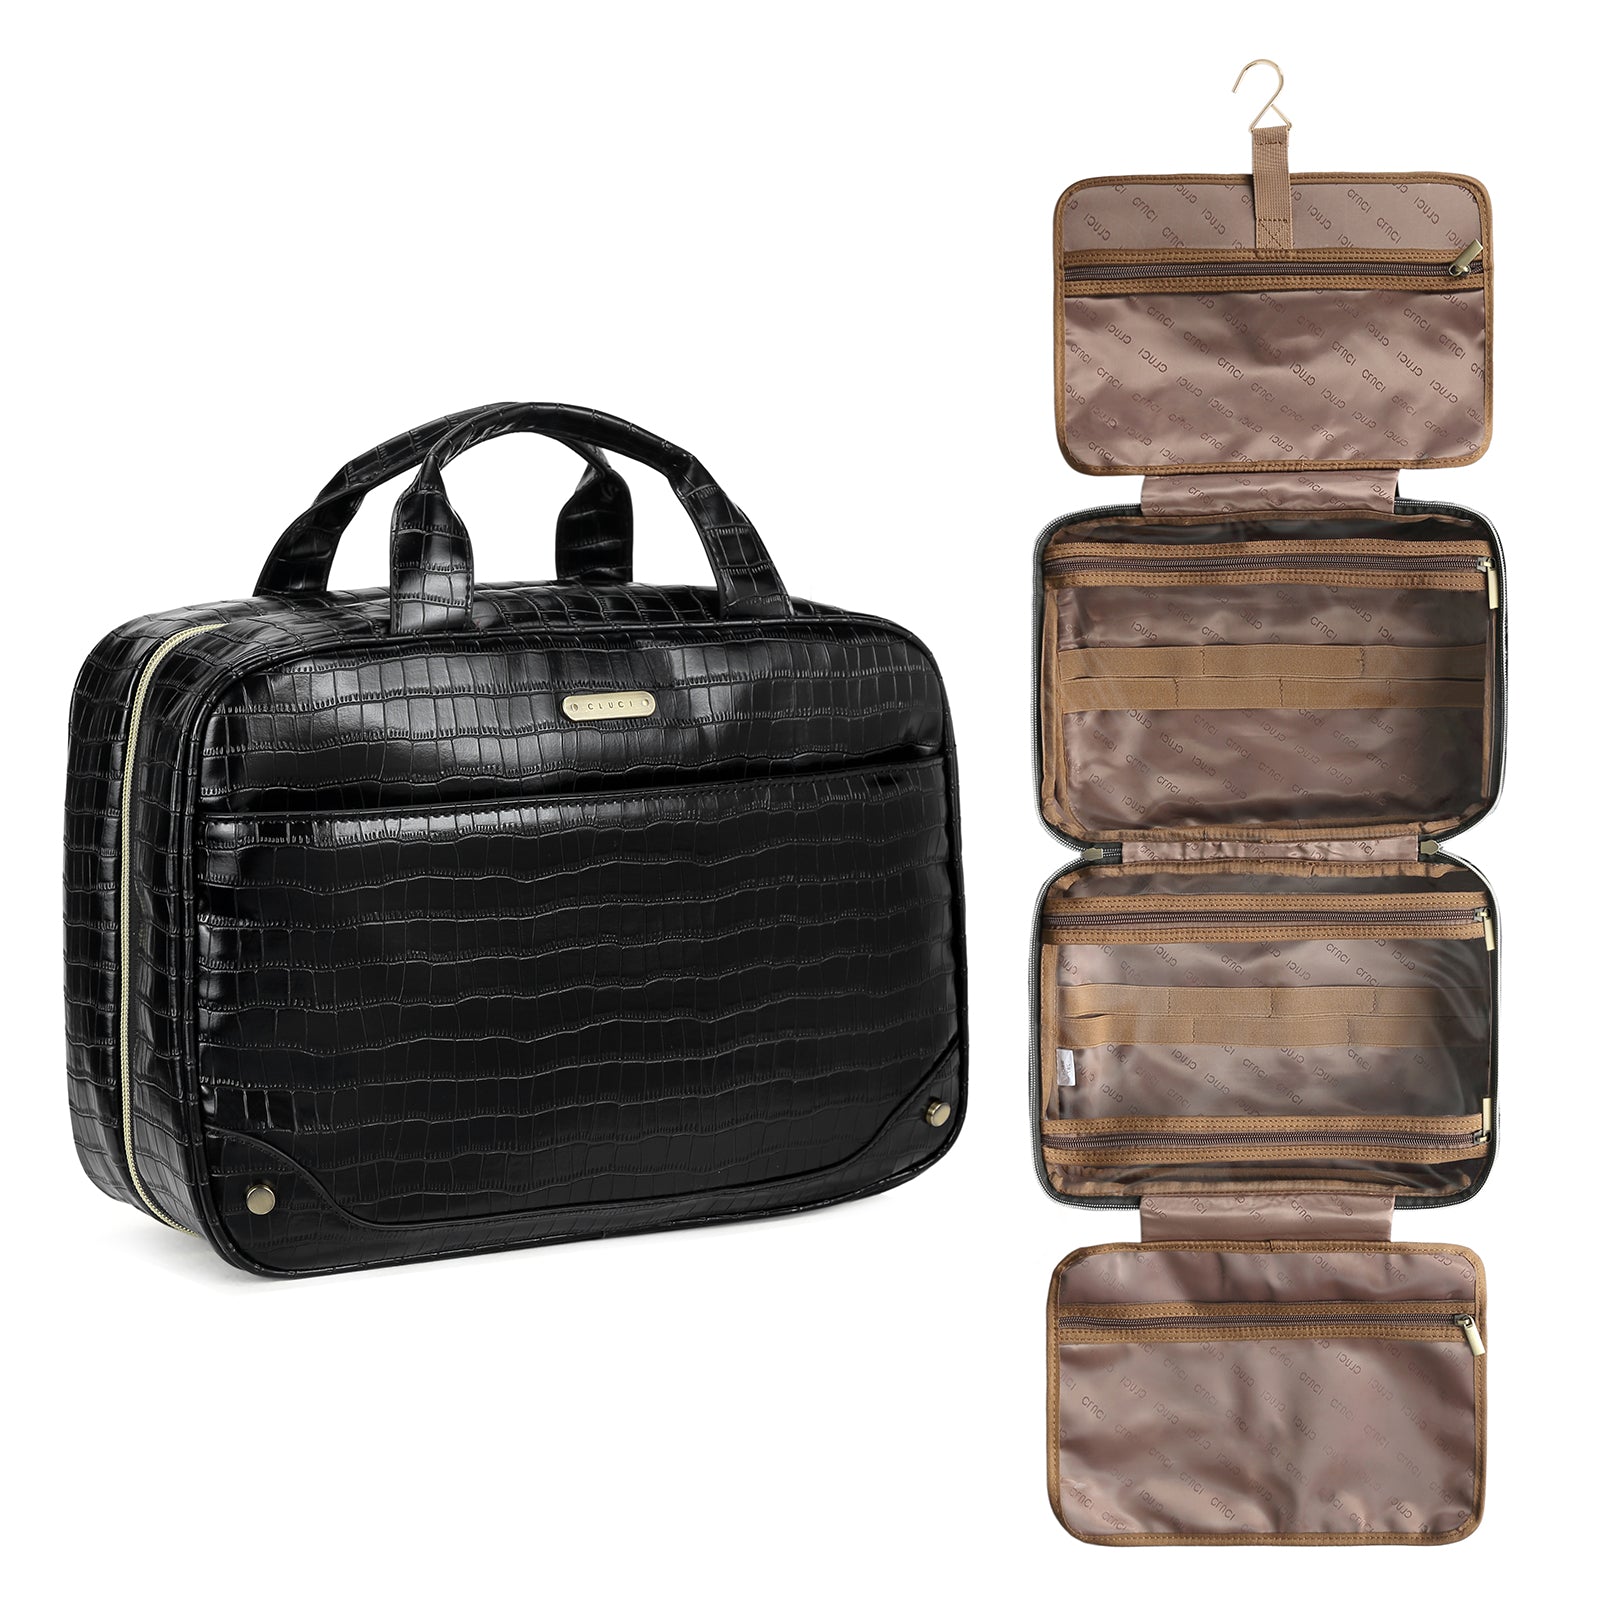 Hook Cosmetic Bag Travel Bag - Women's handbags